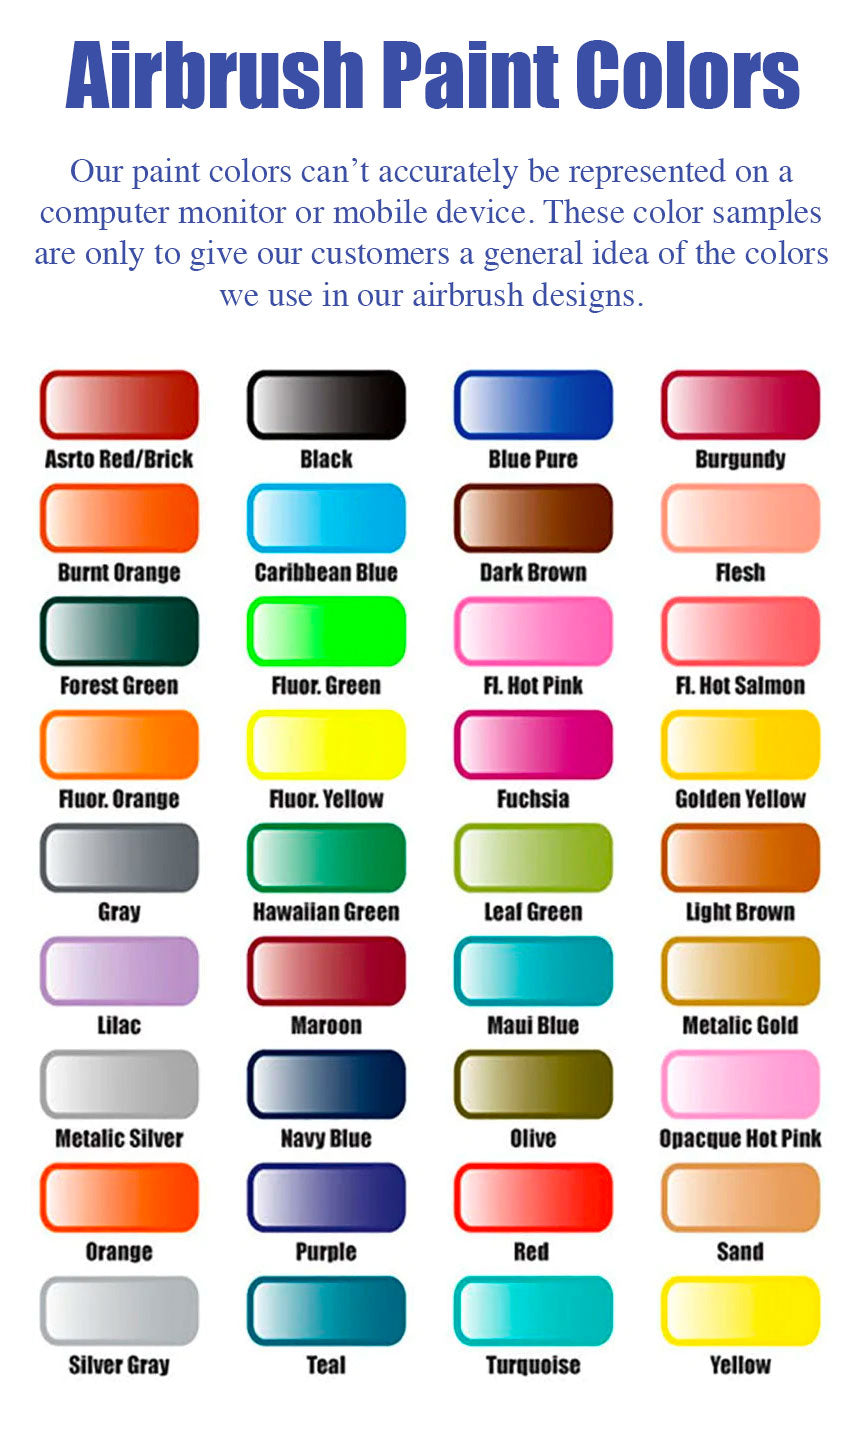 Airbrush T-shirt - Pet Portrait - Pet's Name - Your Choice of Colors